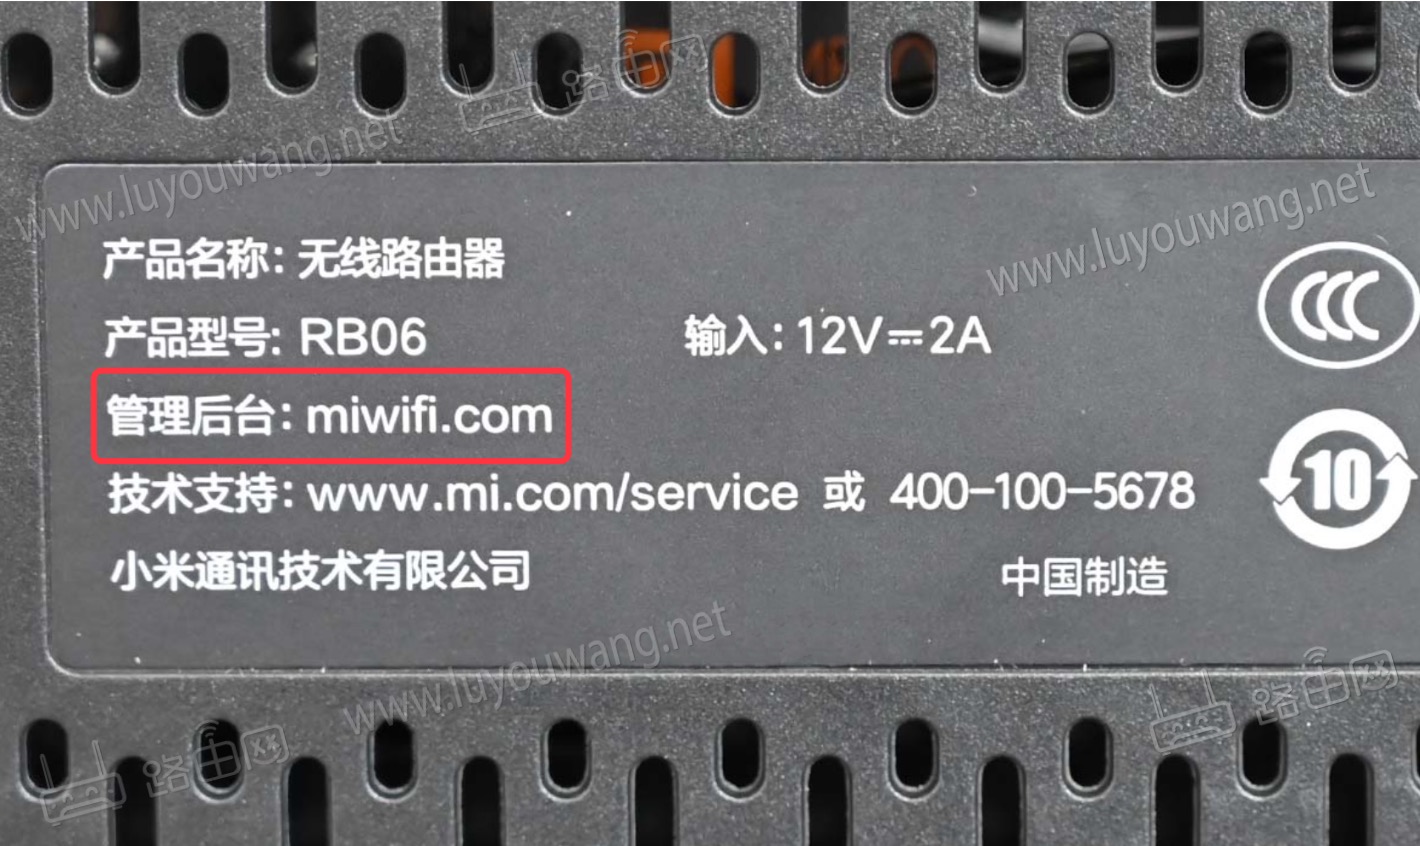 Redmi(红米)路由器AX6000登录入口网址是多少？